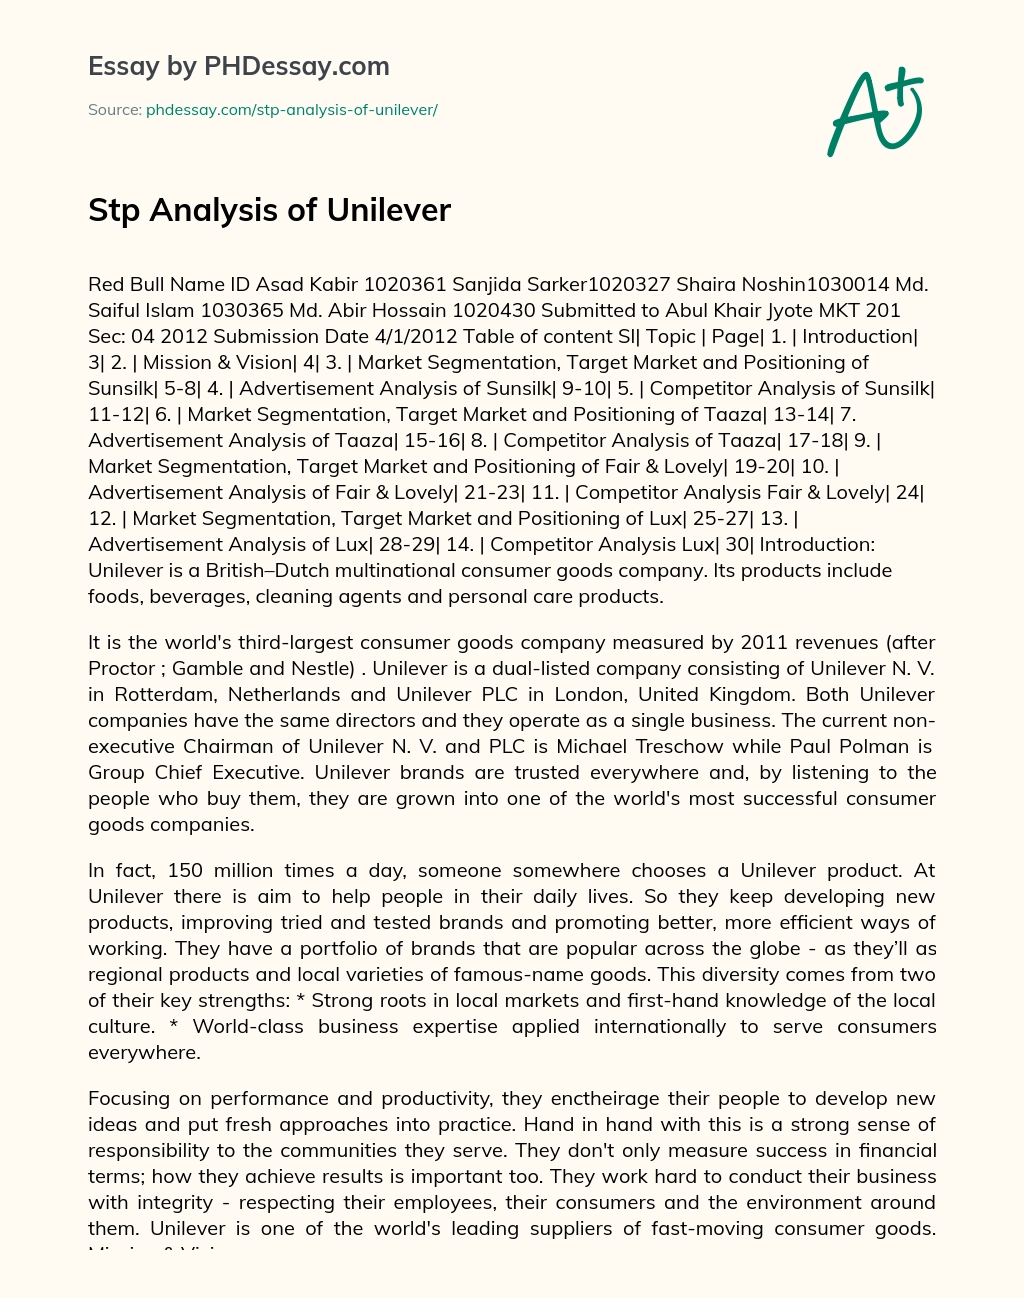 STP Analysis of Unilever essay